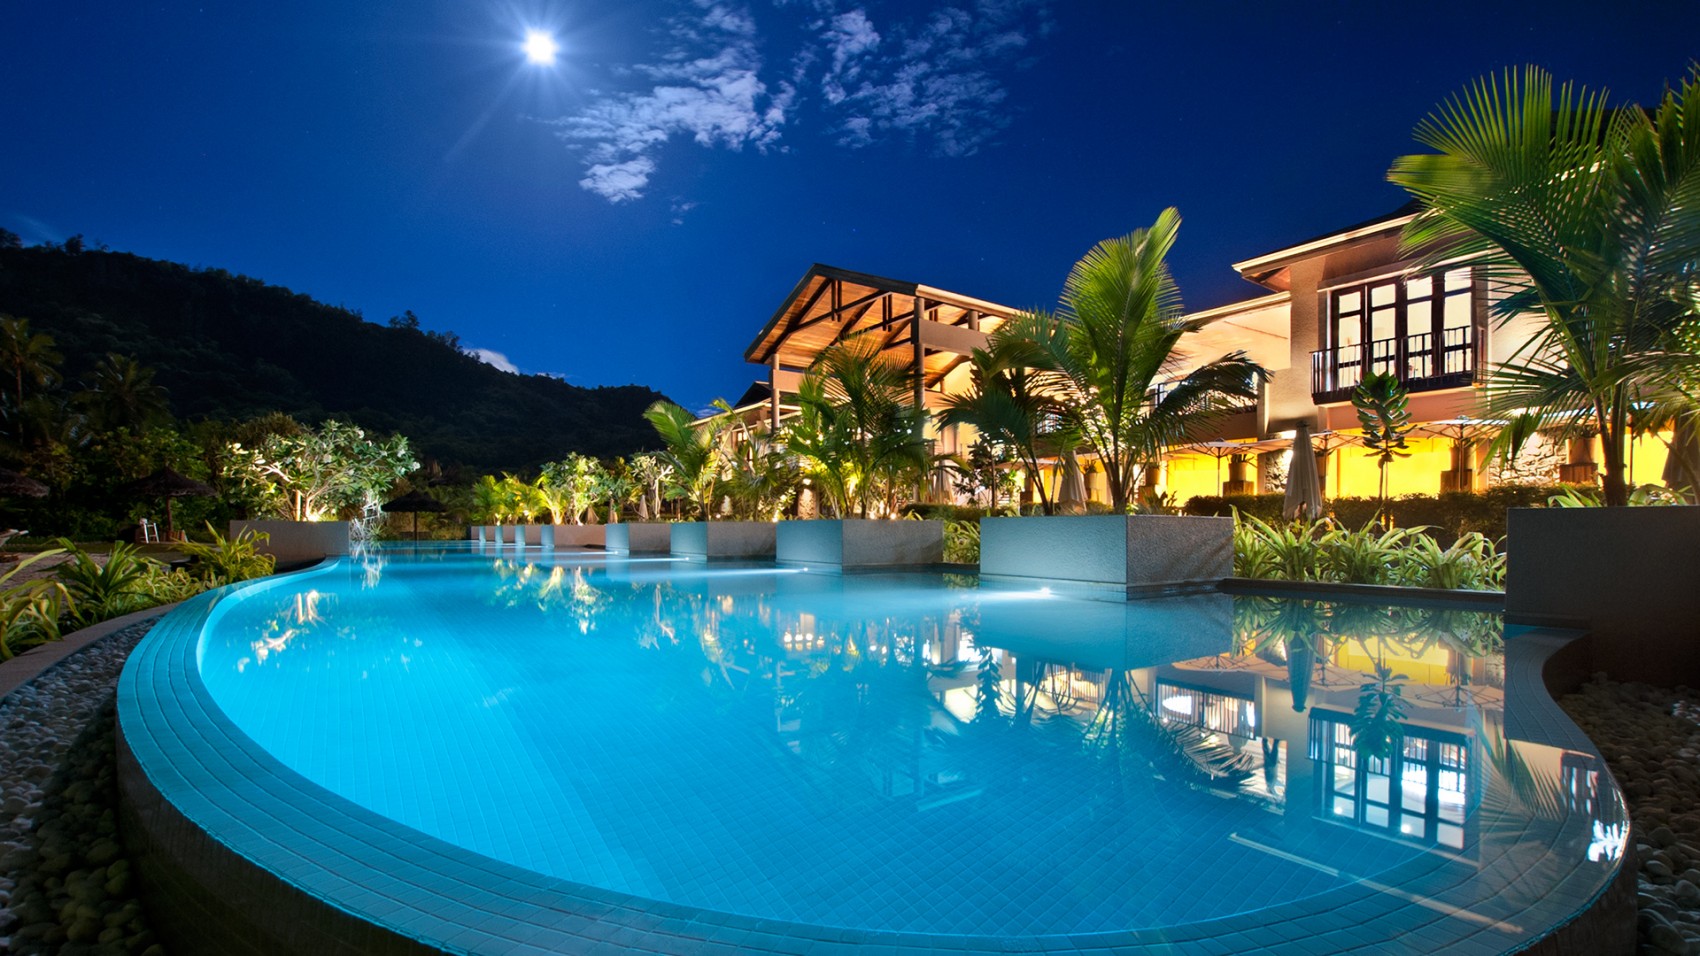 Download - Kempinski Seychelles Resort Baie Lazare , HD Wallpaper & Backgrounds